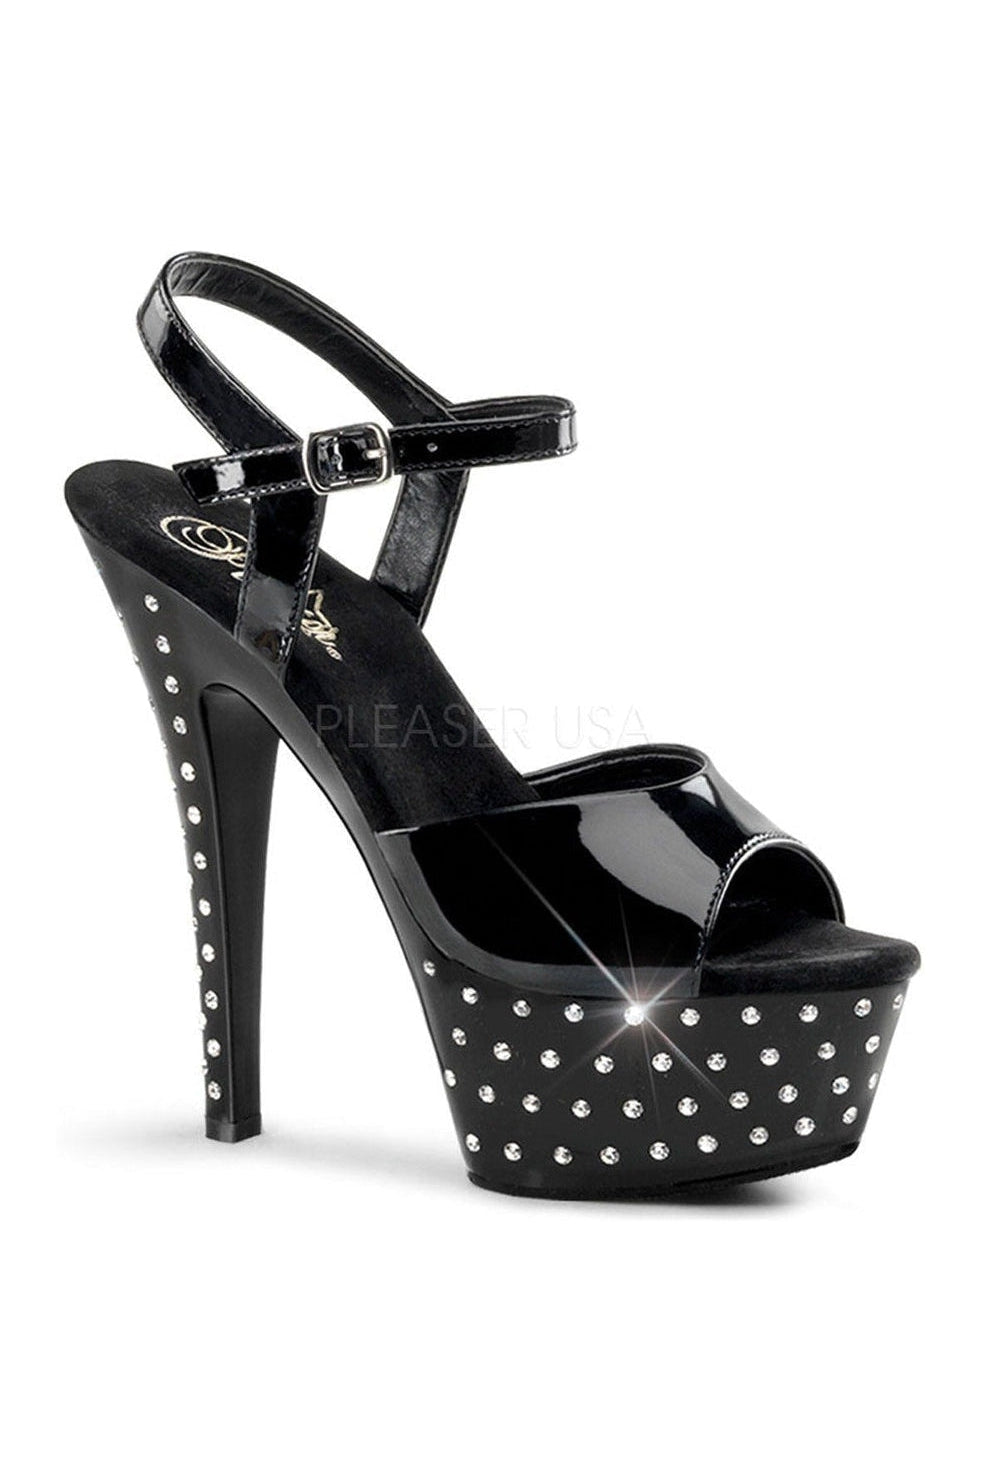 STARDUST-609 Platform Sandal | Black Patent-Pleaser-Black-Sandals-SEXYSHOES.COM